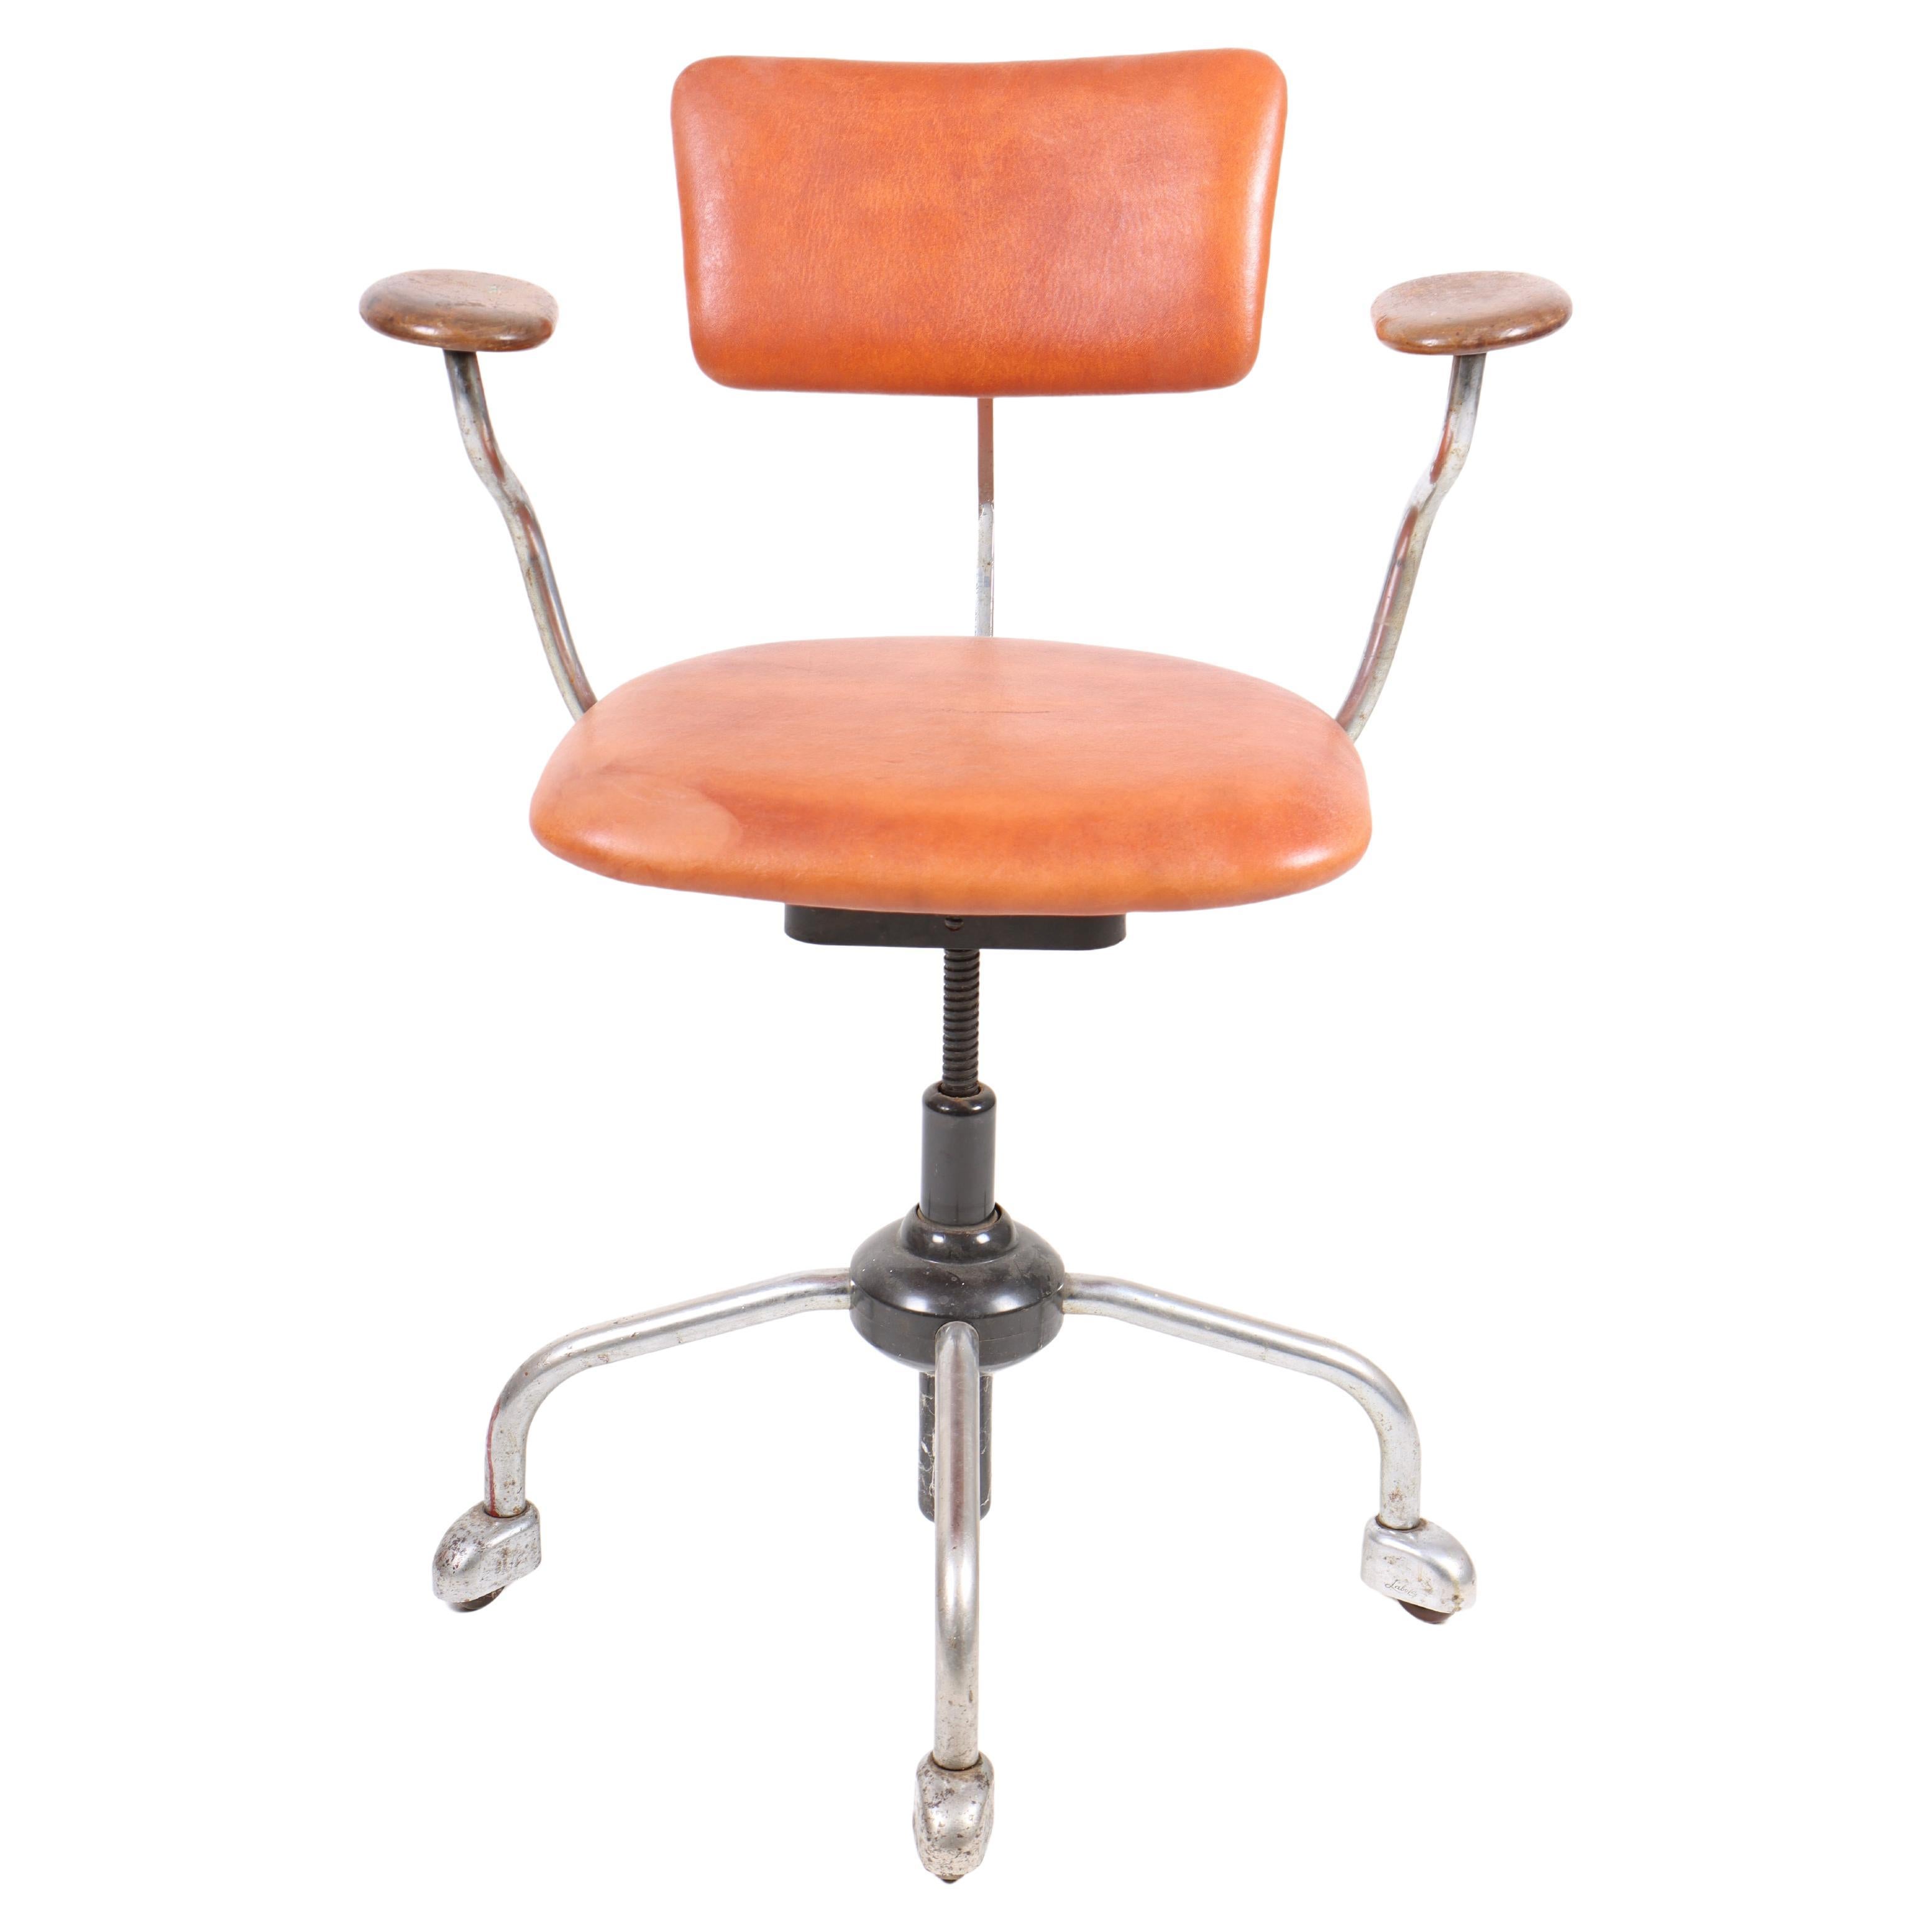 Danish Midcentury Desk Chair in Patinated Leather by Jørgen Rasmussen